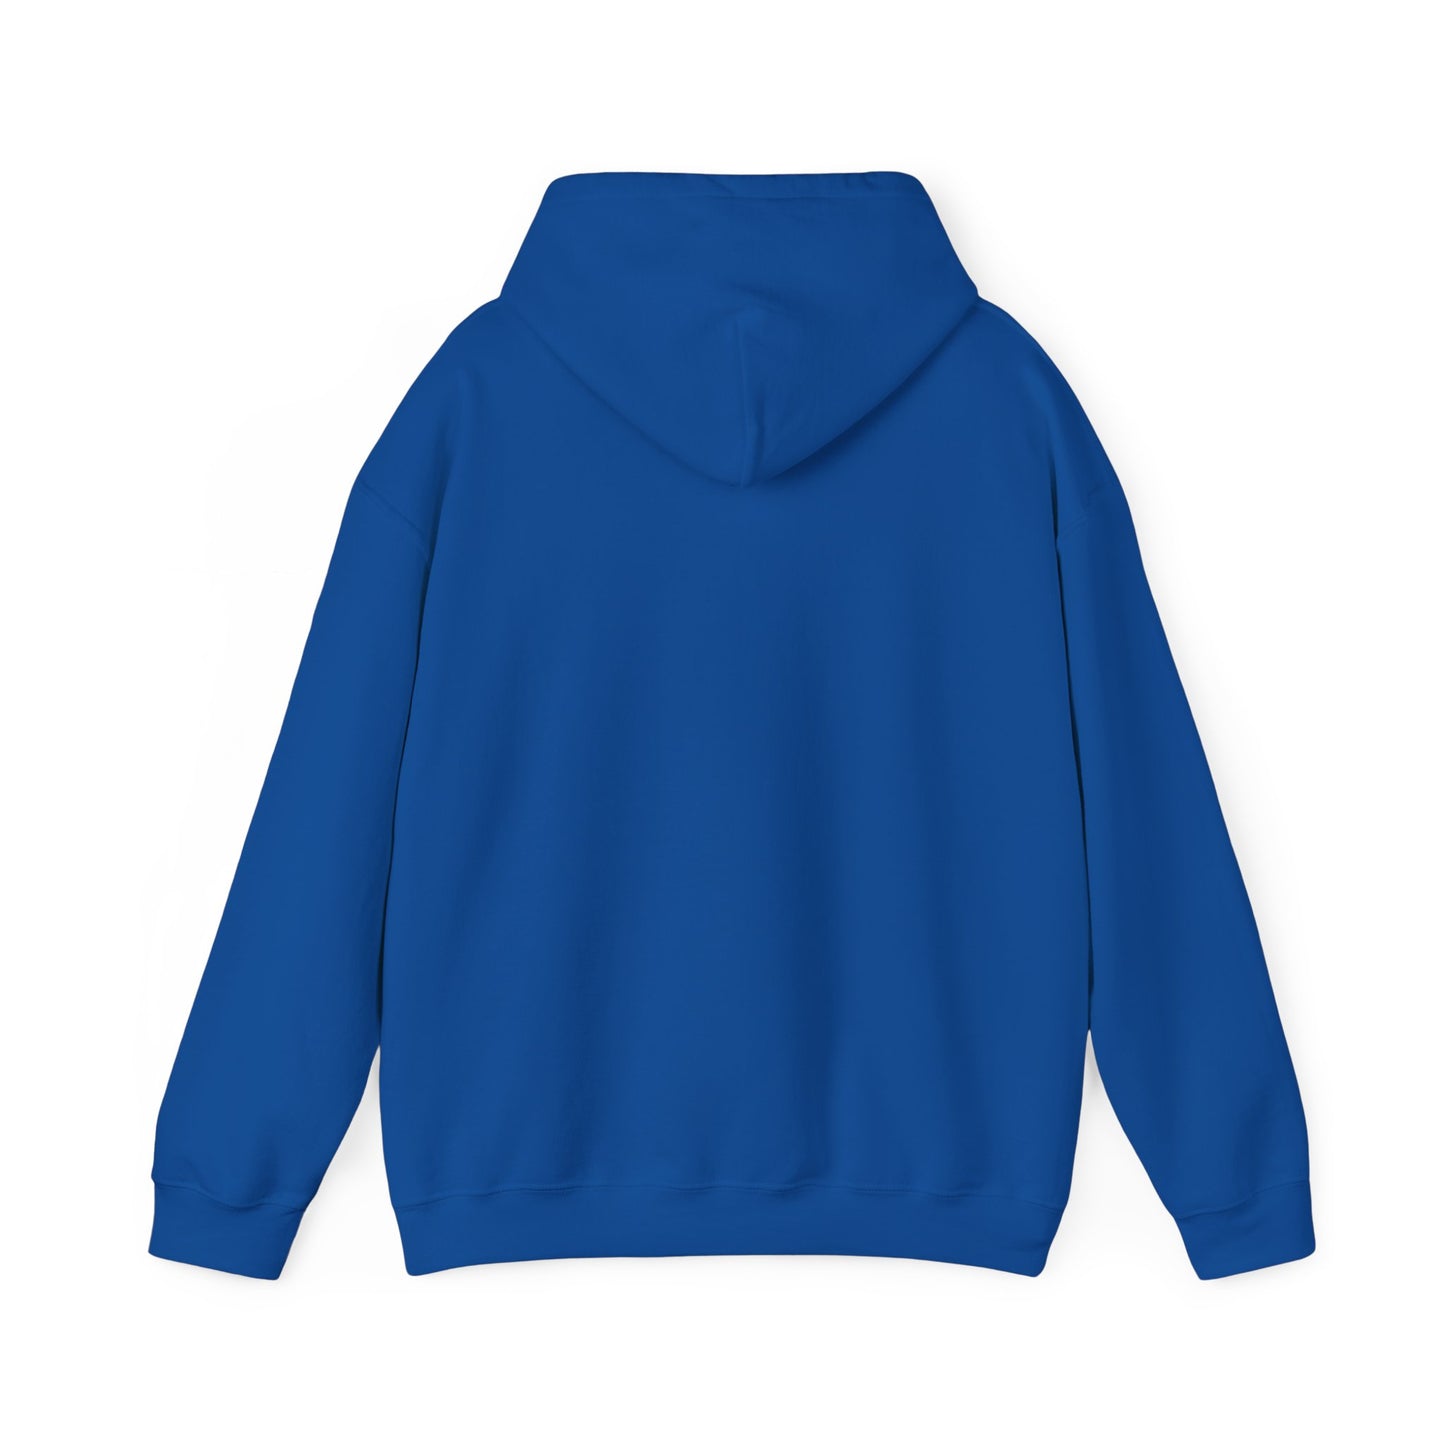 She Is Strong - Unisex Heavy Blend Hooded Sweatshirt